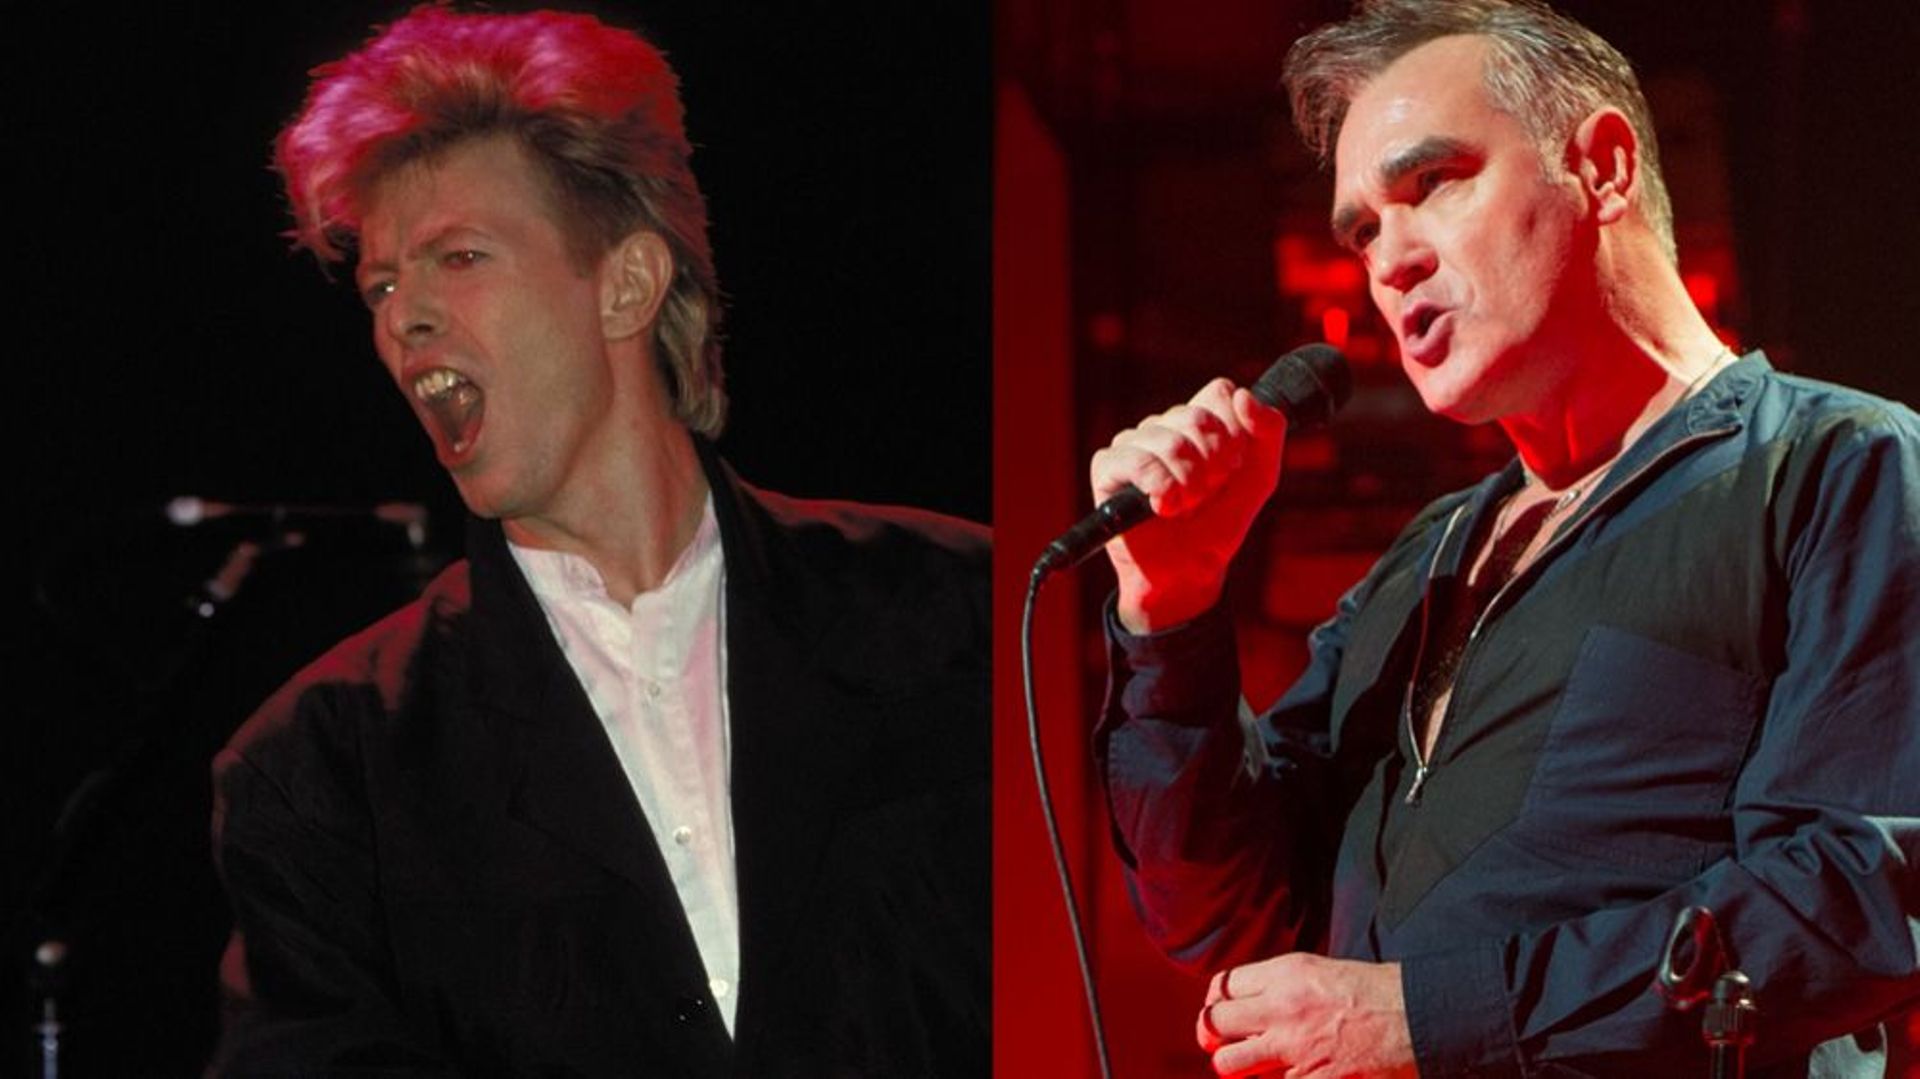 David Bowie - Morrissey